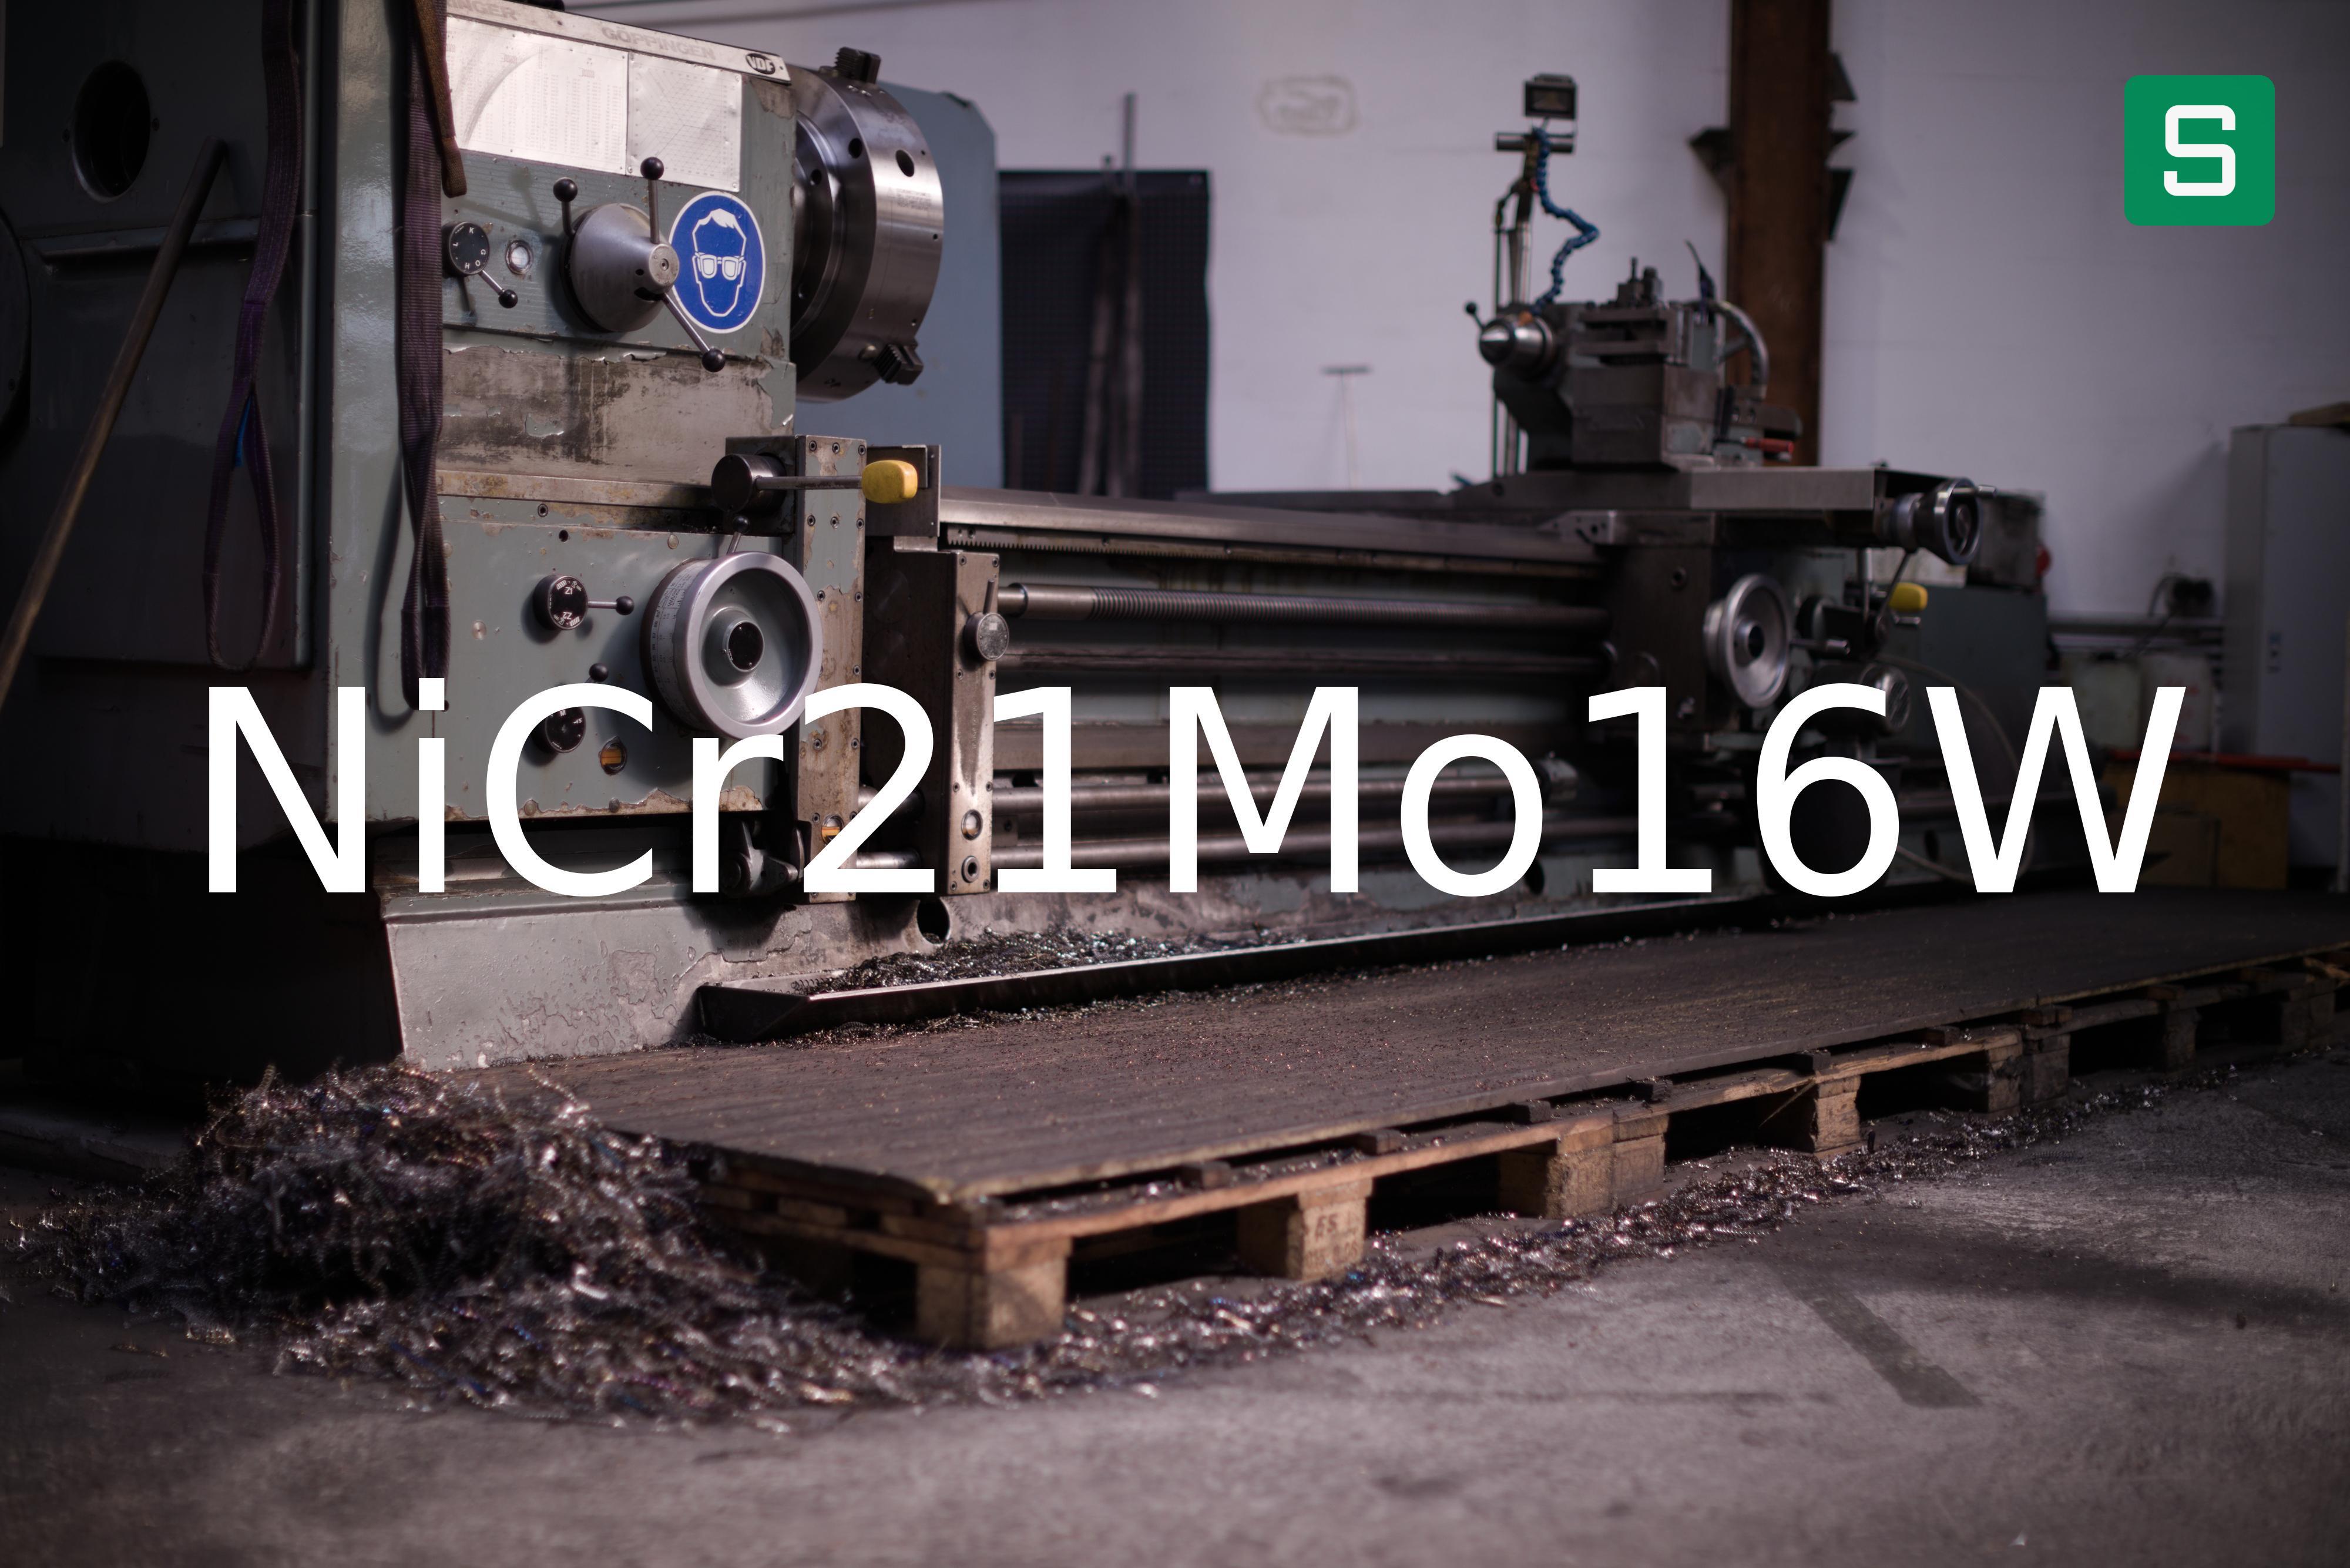 Steel Material: NiCr21Mo16W